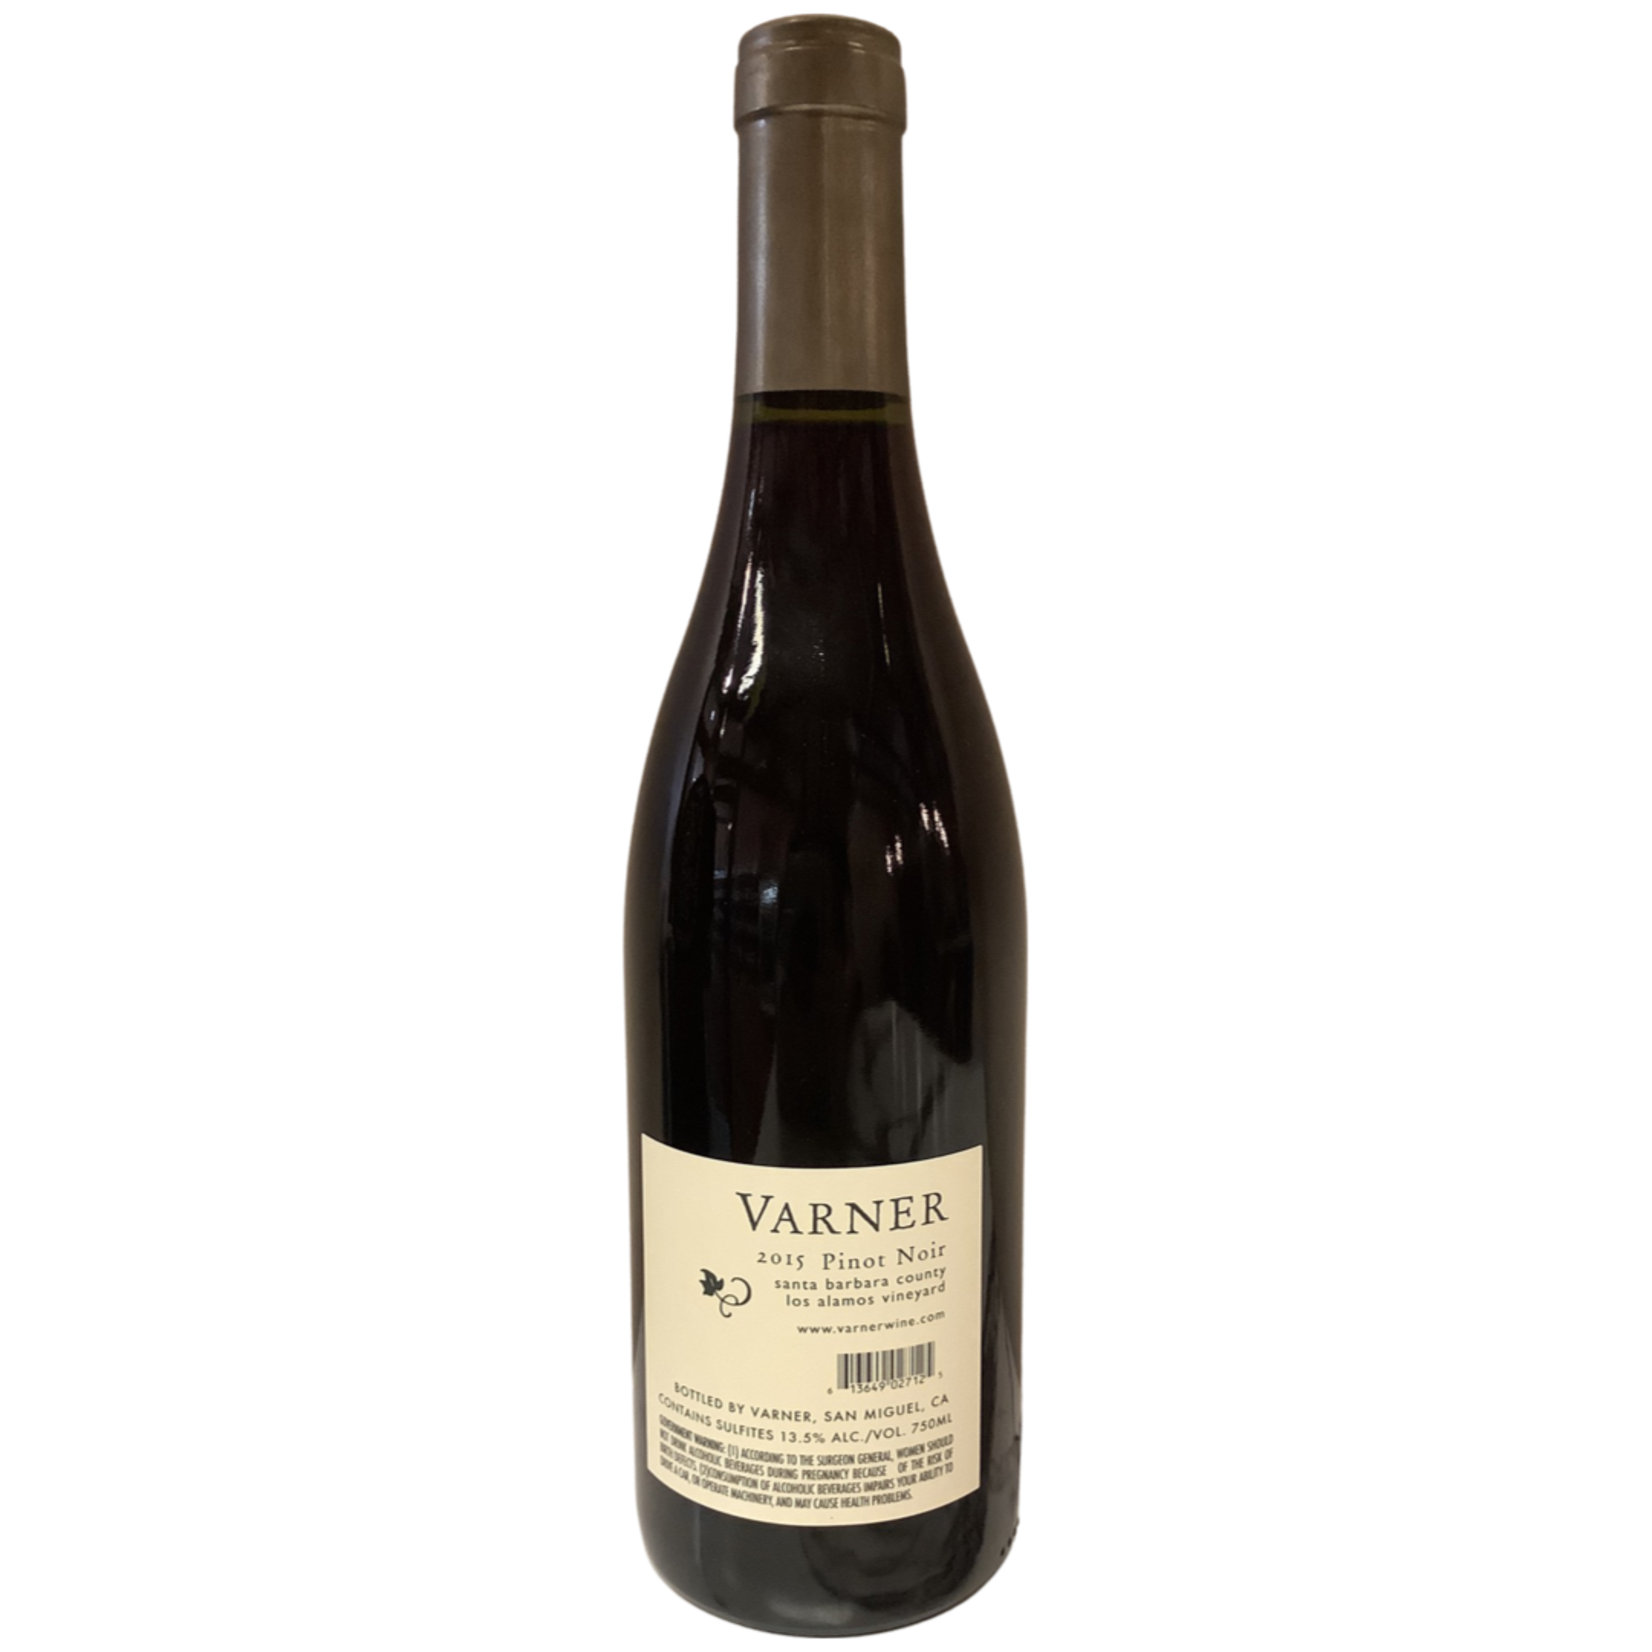 2015 Varner "Los Alamos Vineyard" Pinot Noir, Santa Barbara County CA